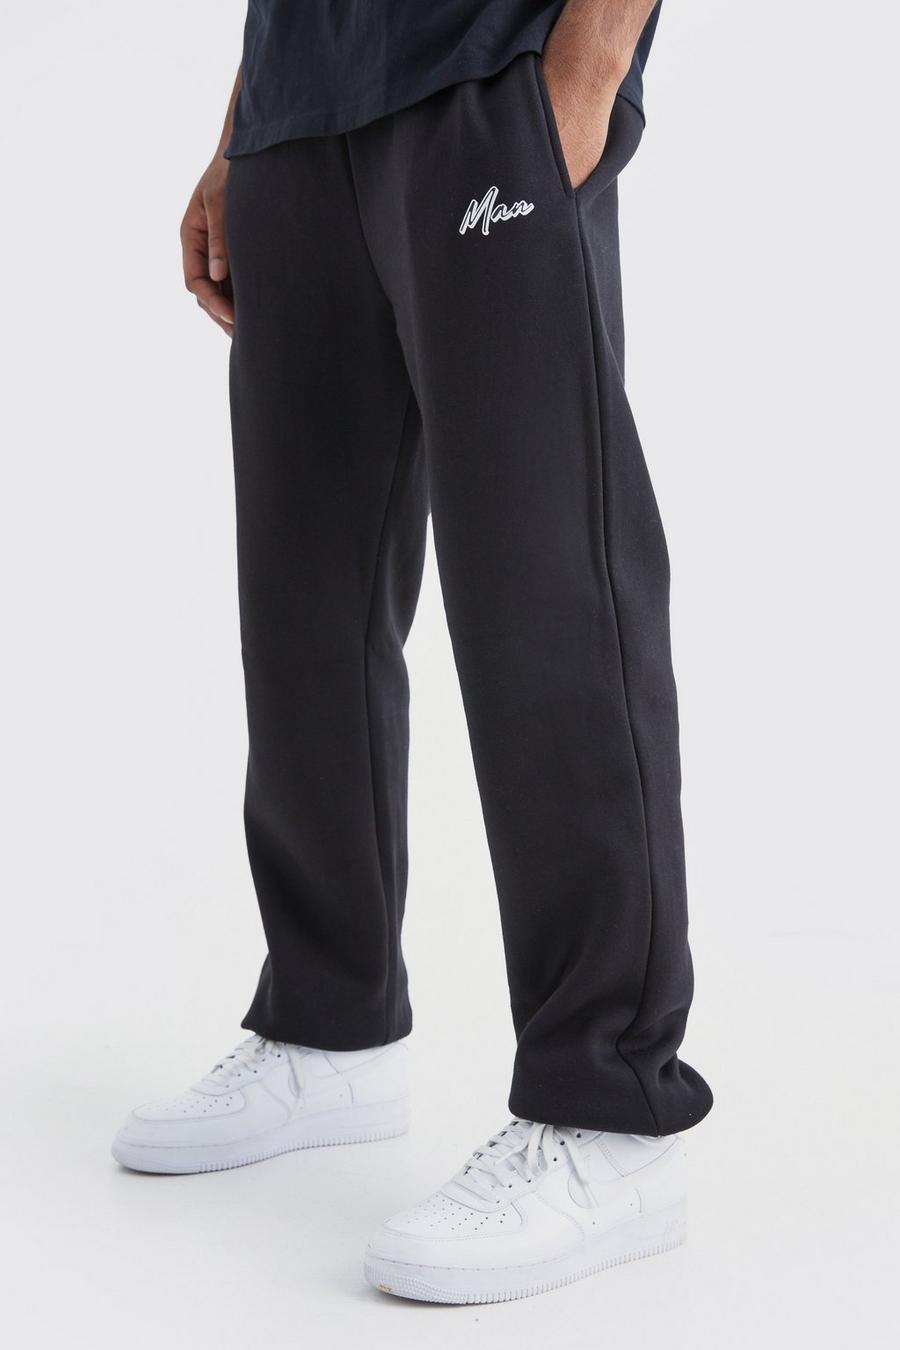 Pantaloni tuta Tall Core Fit con firma Man e logo, Black